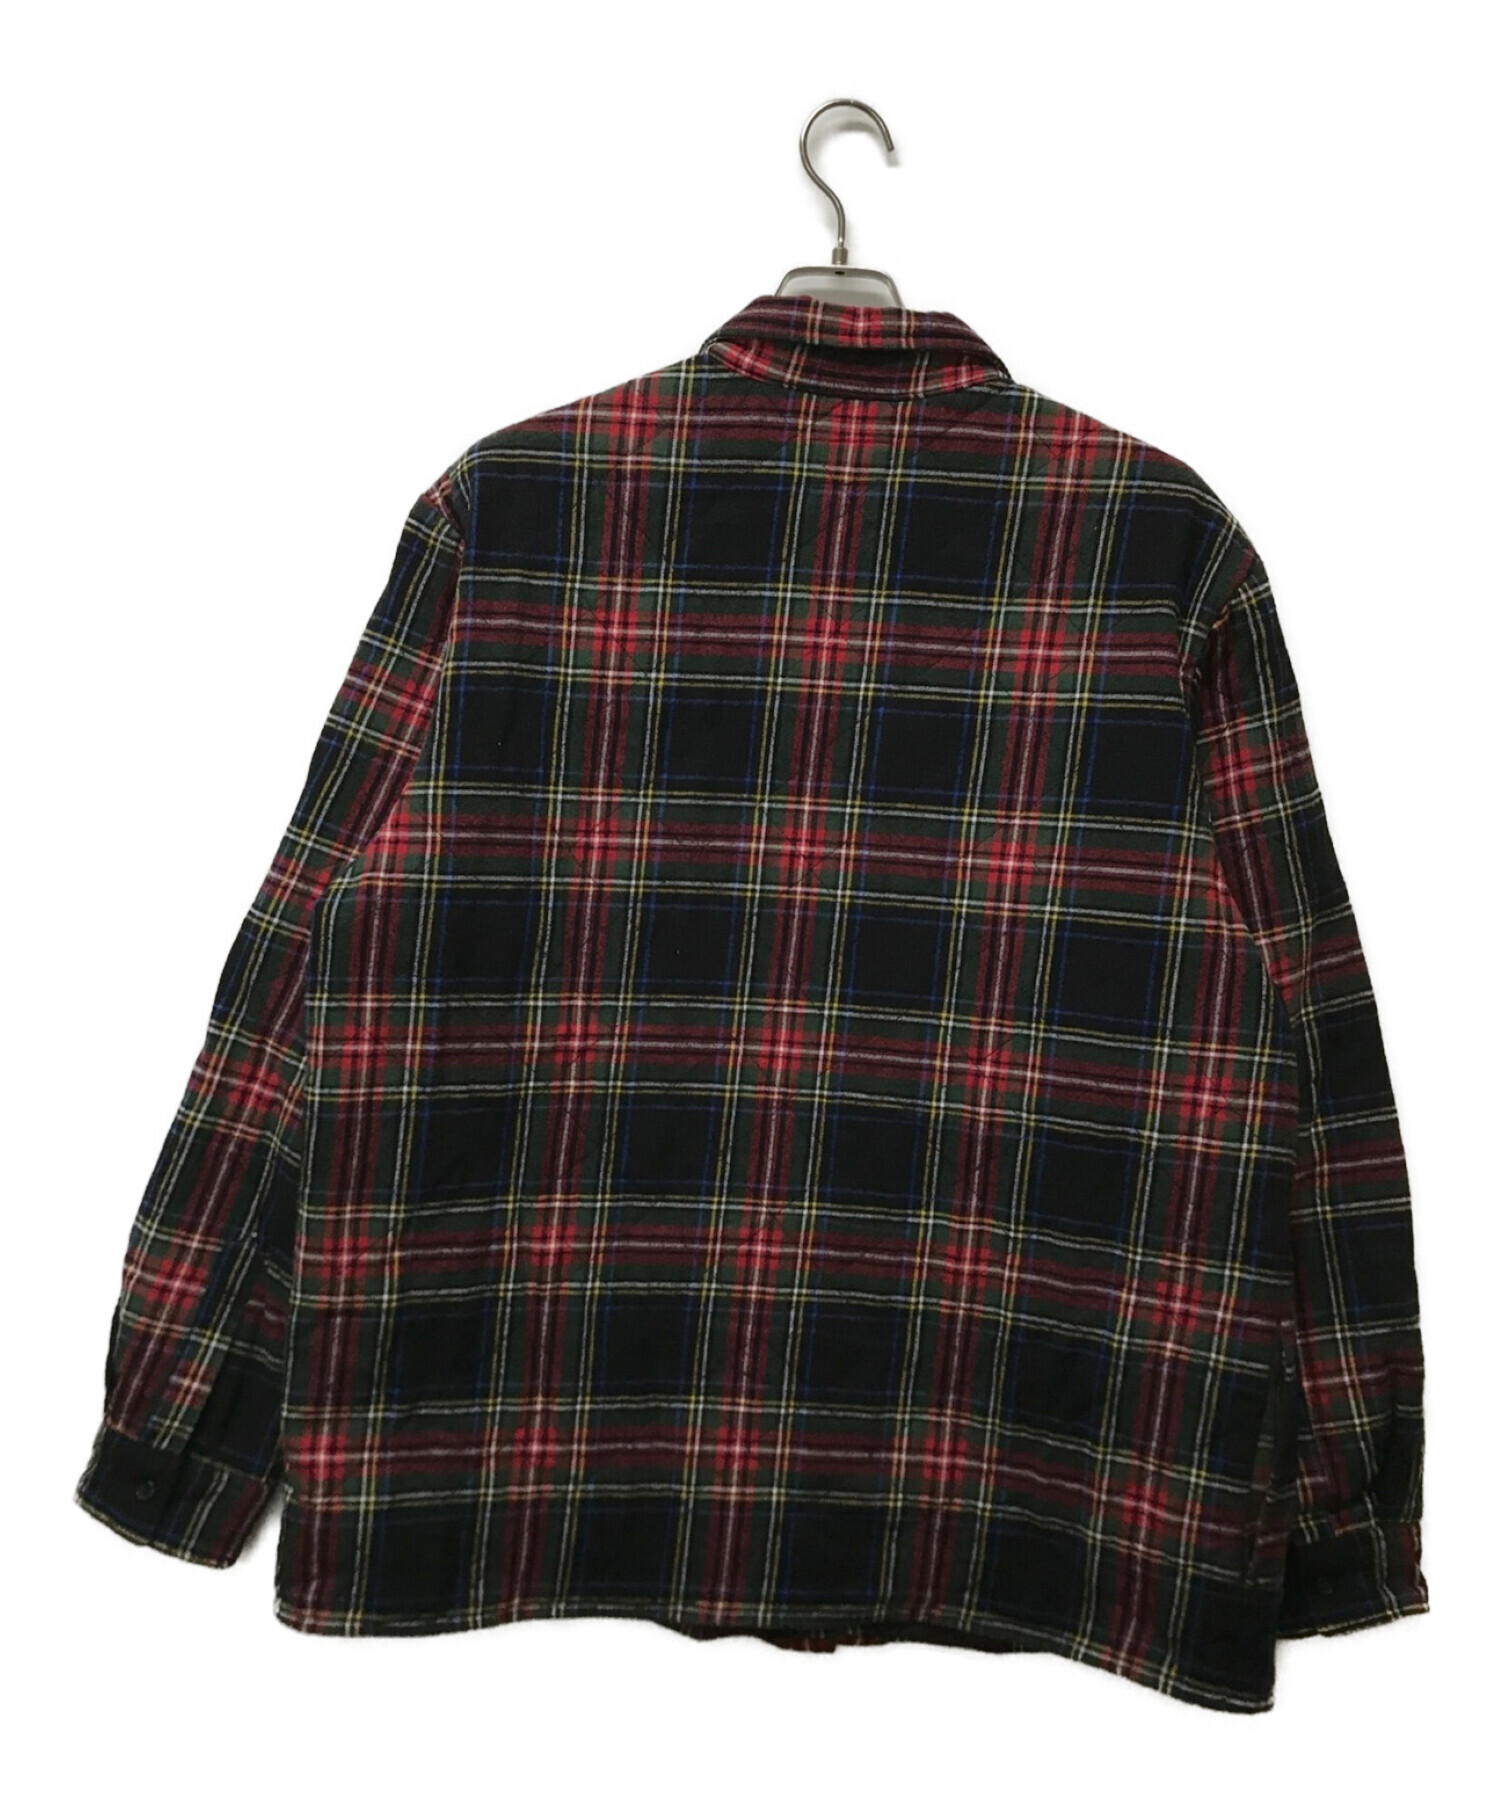 Supreme (シュプリーム) Quilted Plaid Flannel Shirt レッド サイズ:L